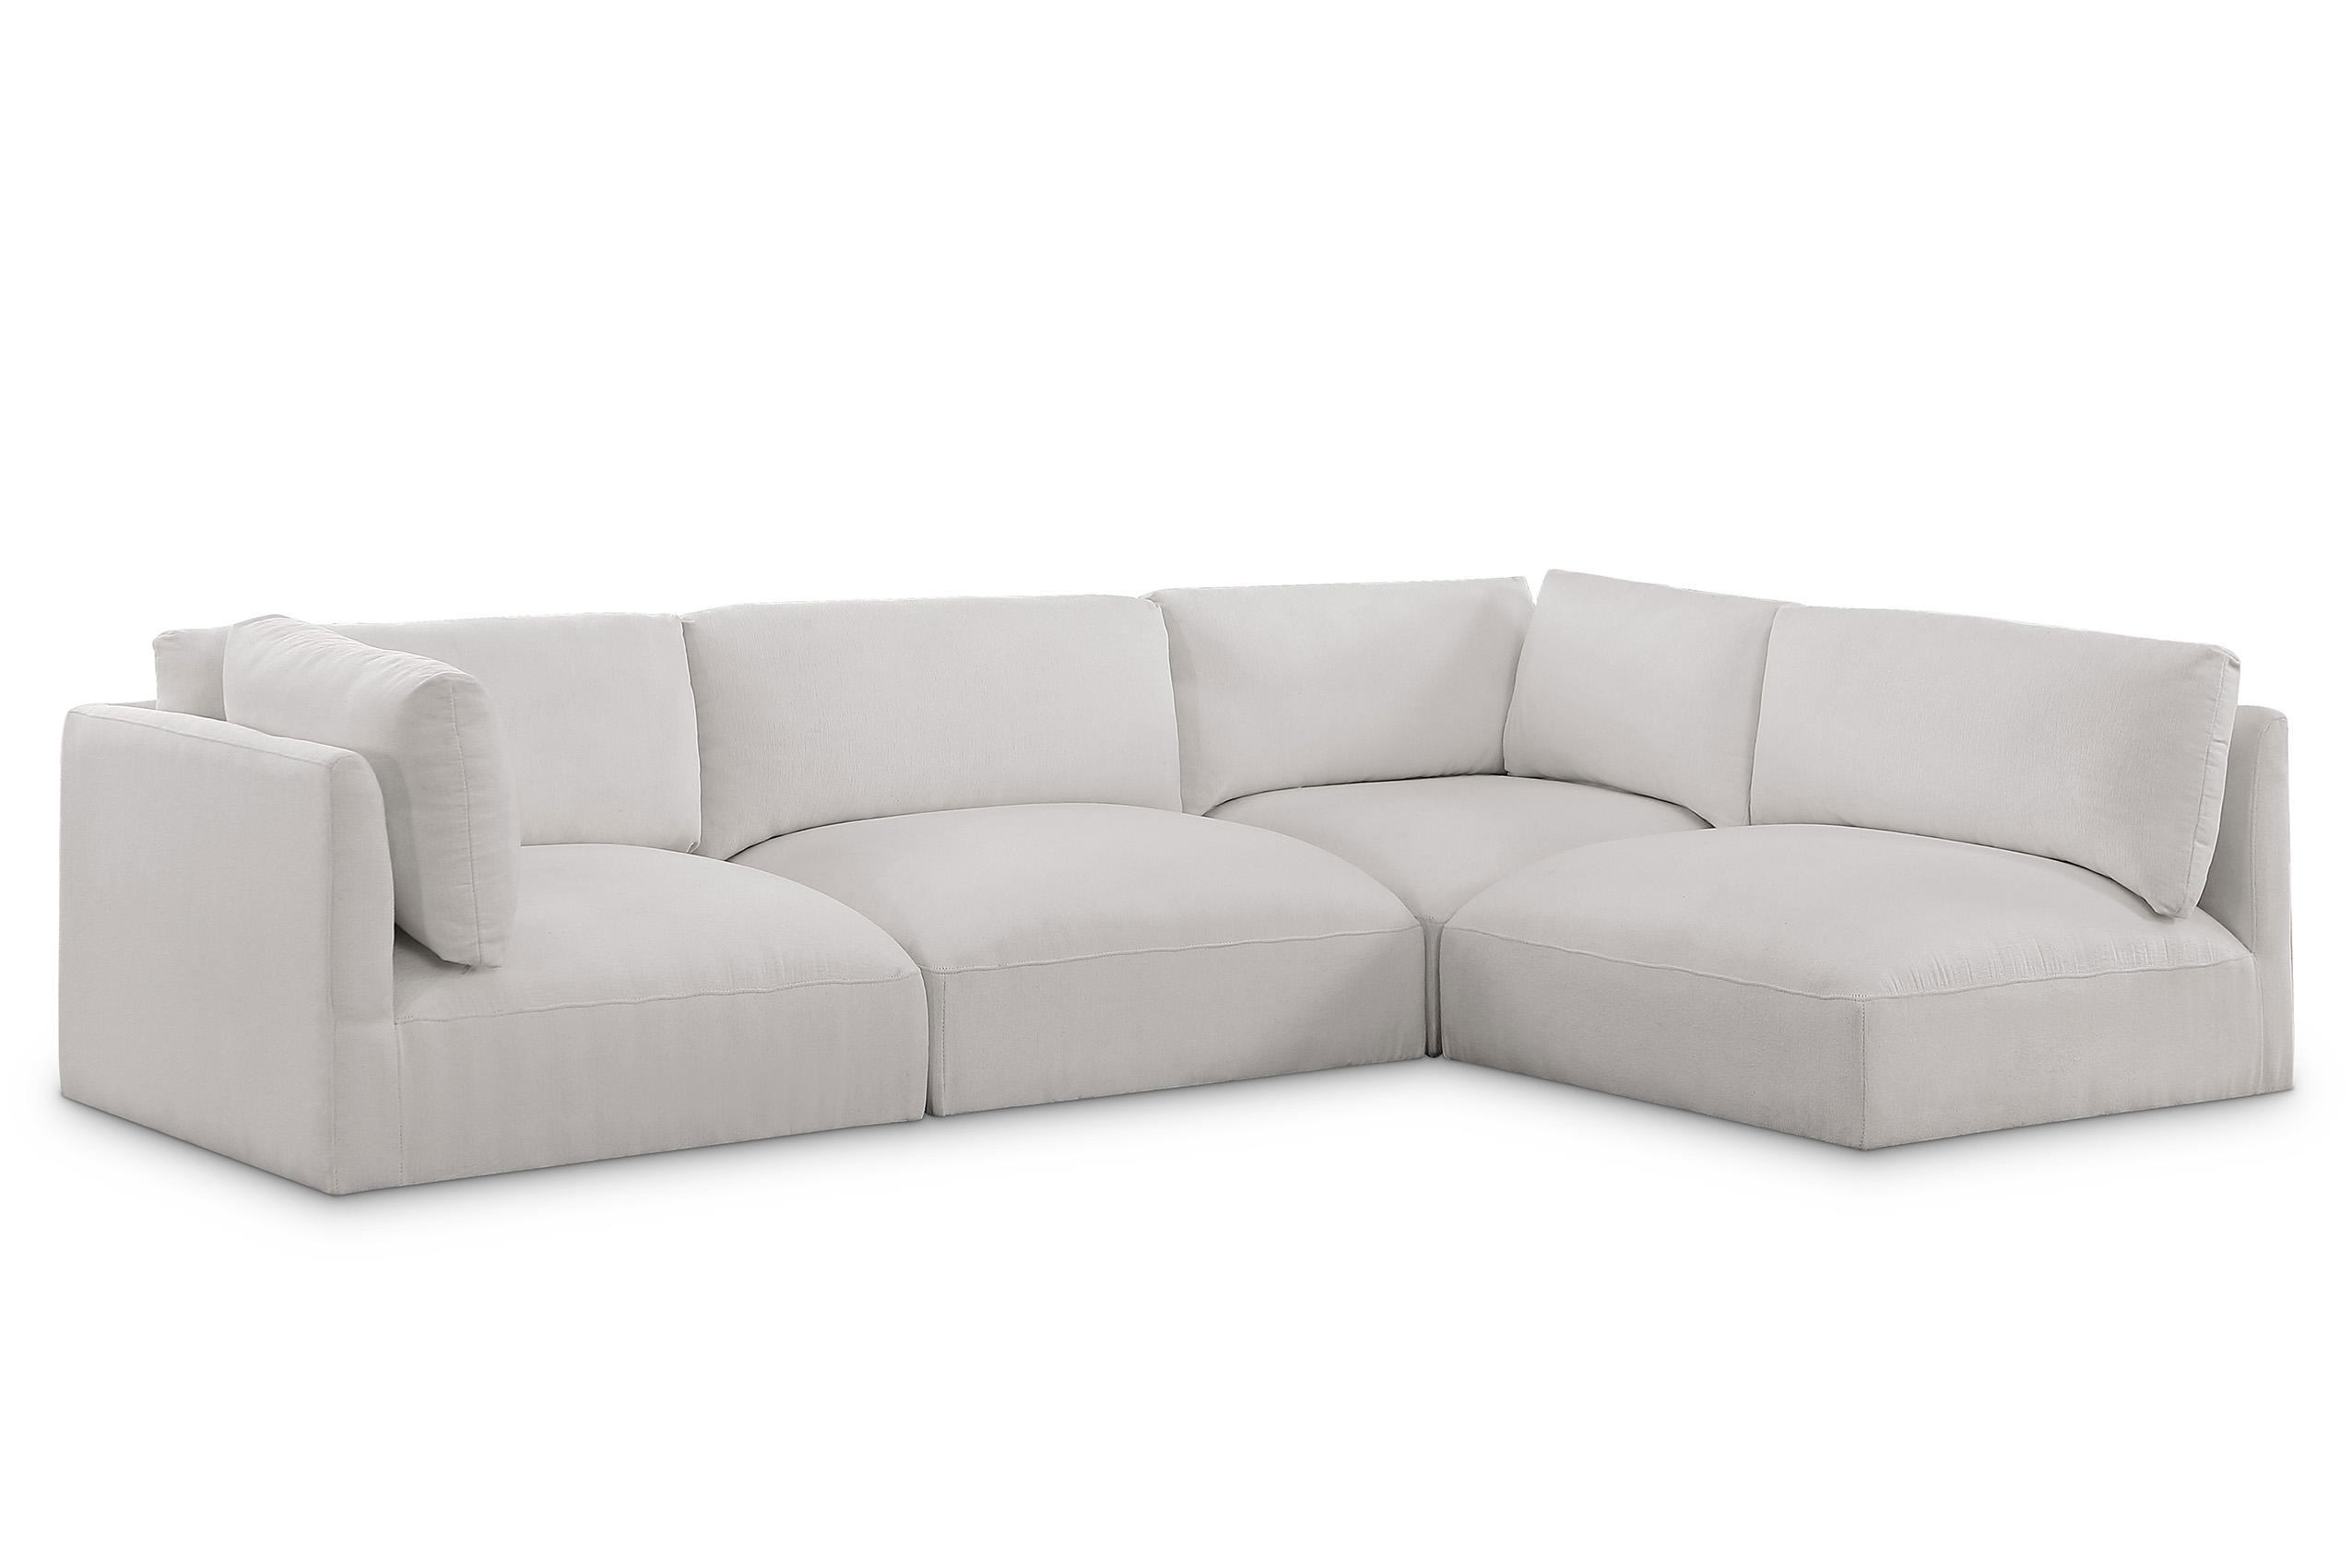 Contemporary, Modern Modular Sectional Sofa EASE 696Cream-Sec4B 696Cream-Sec4B in Cream Fabric